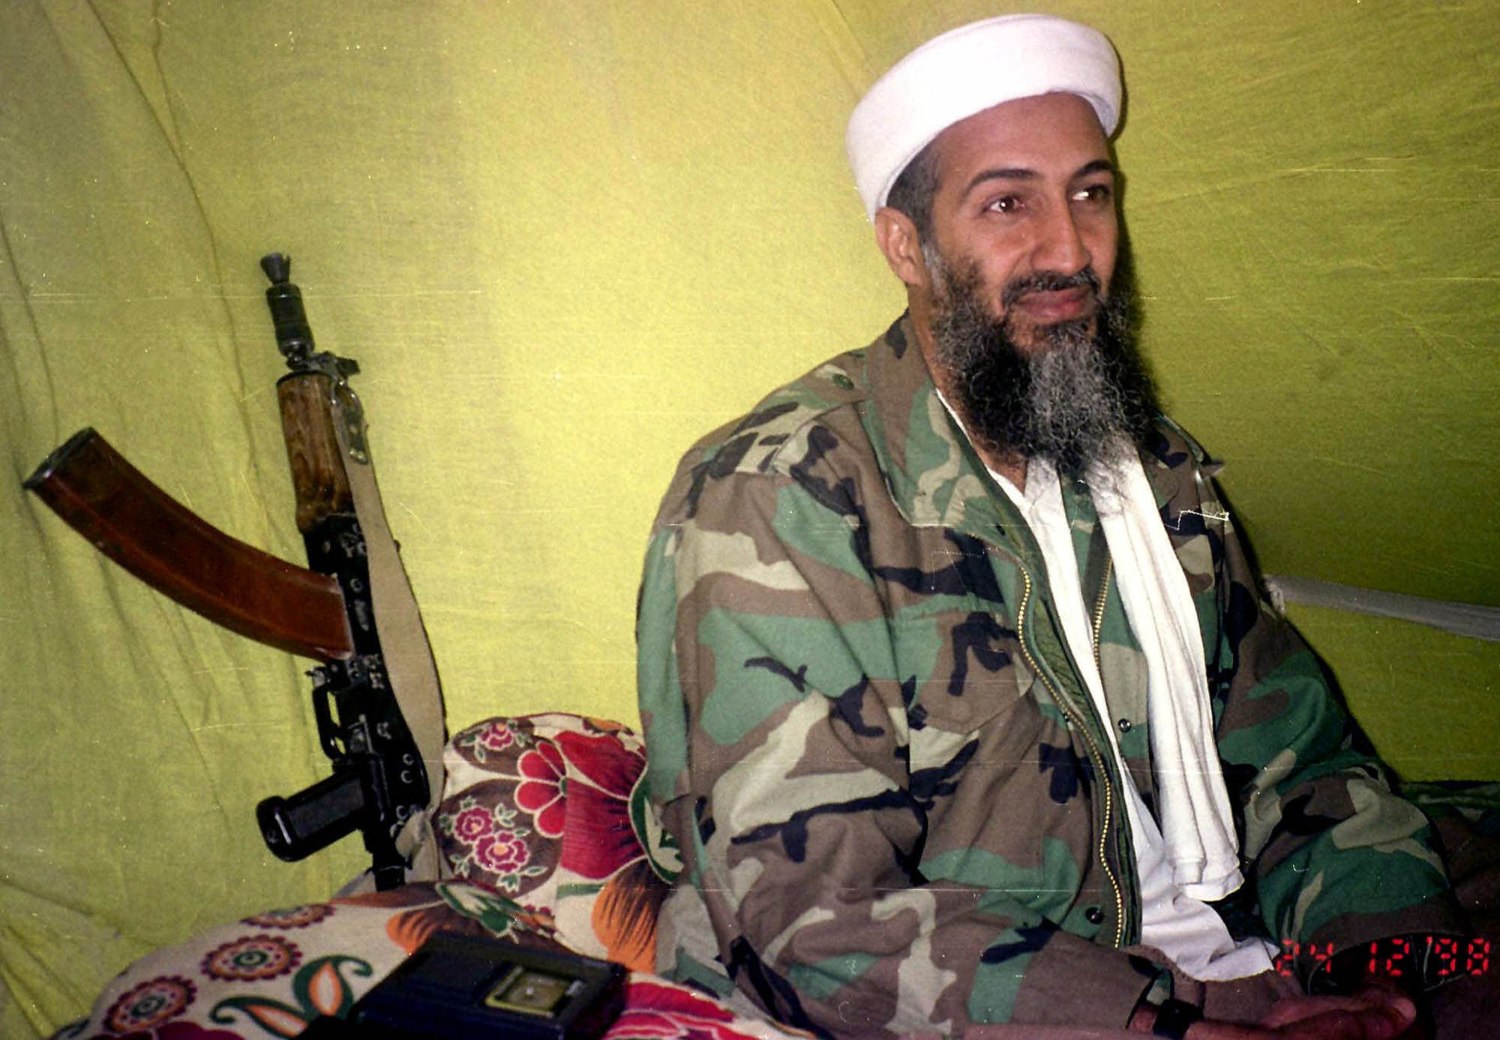 Deleted Osama bin Laden Letter Sparks Censorship Accusations